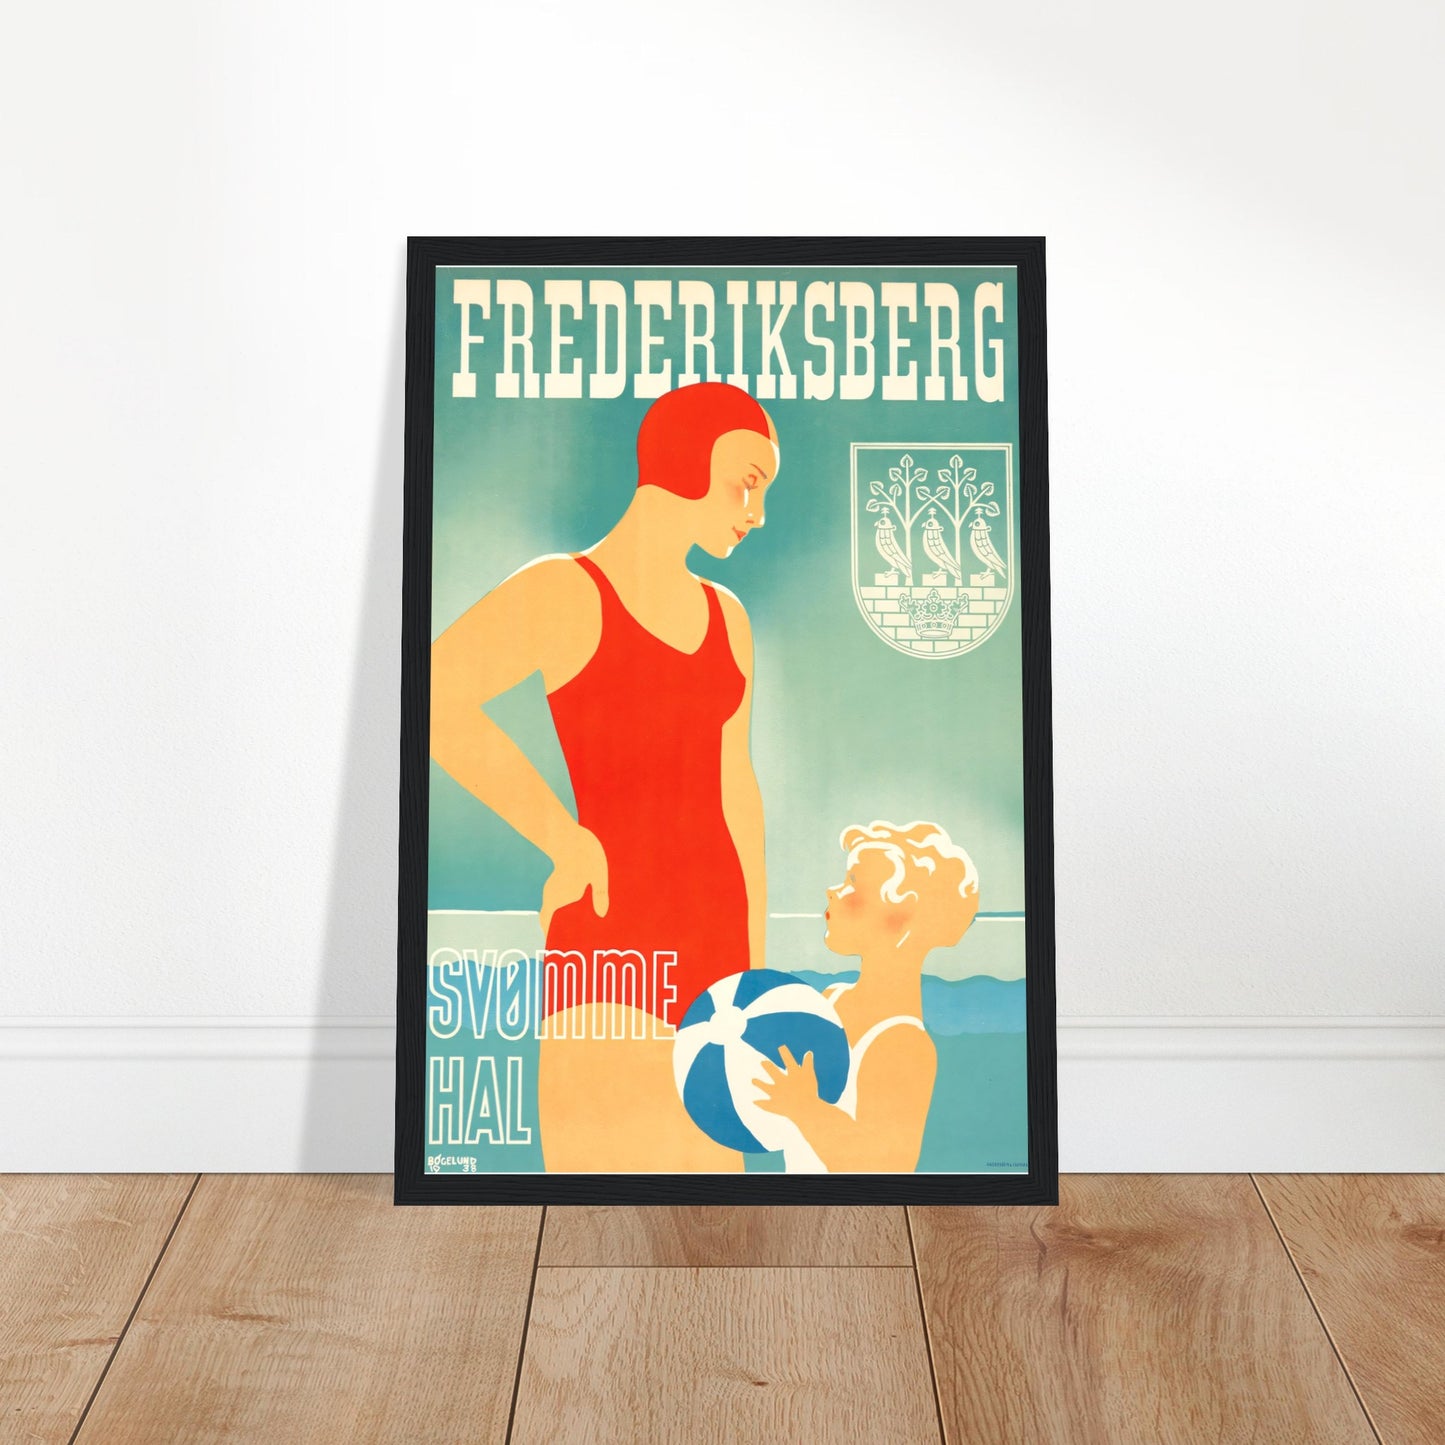 Frederiksberg Vintage Poster Reprint on Premium matte paper - Posterify